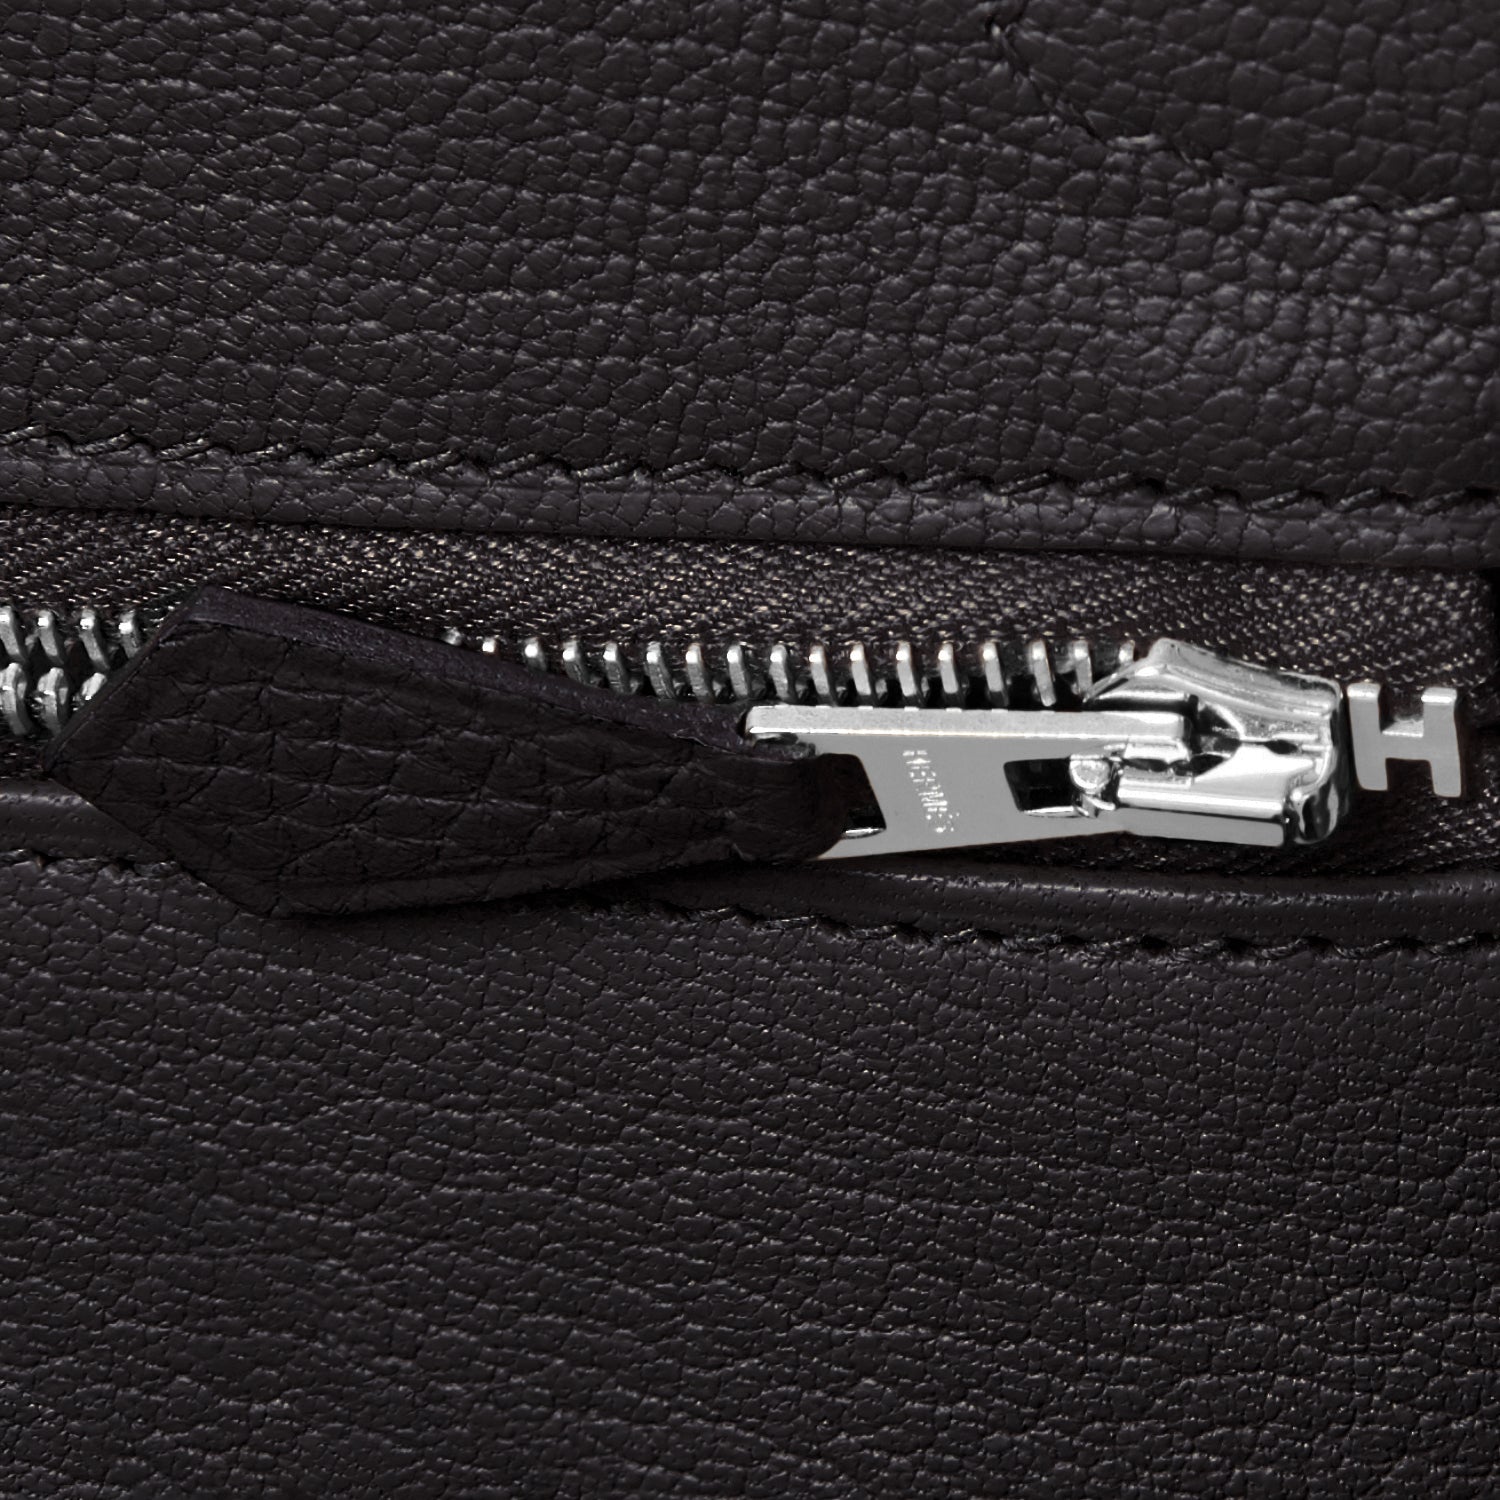 Hermes Birkin 30 Black Box Leather Bag Palladium Hardware • MIGHTYCHIC • 